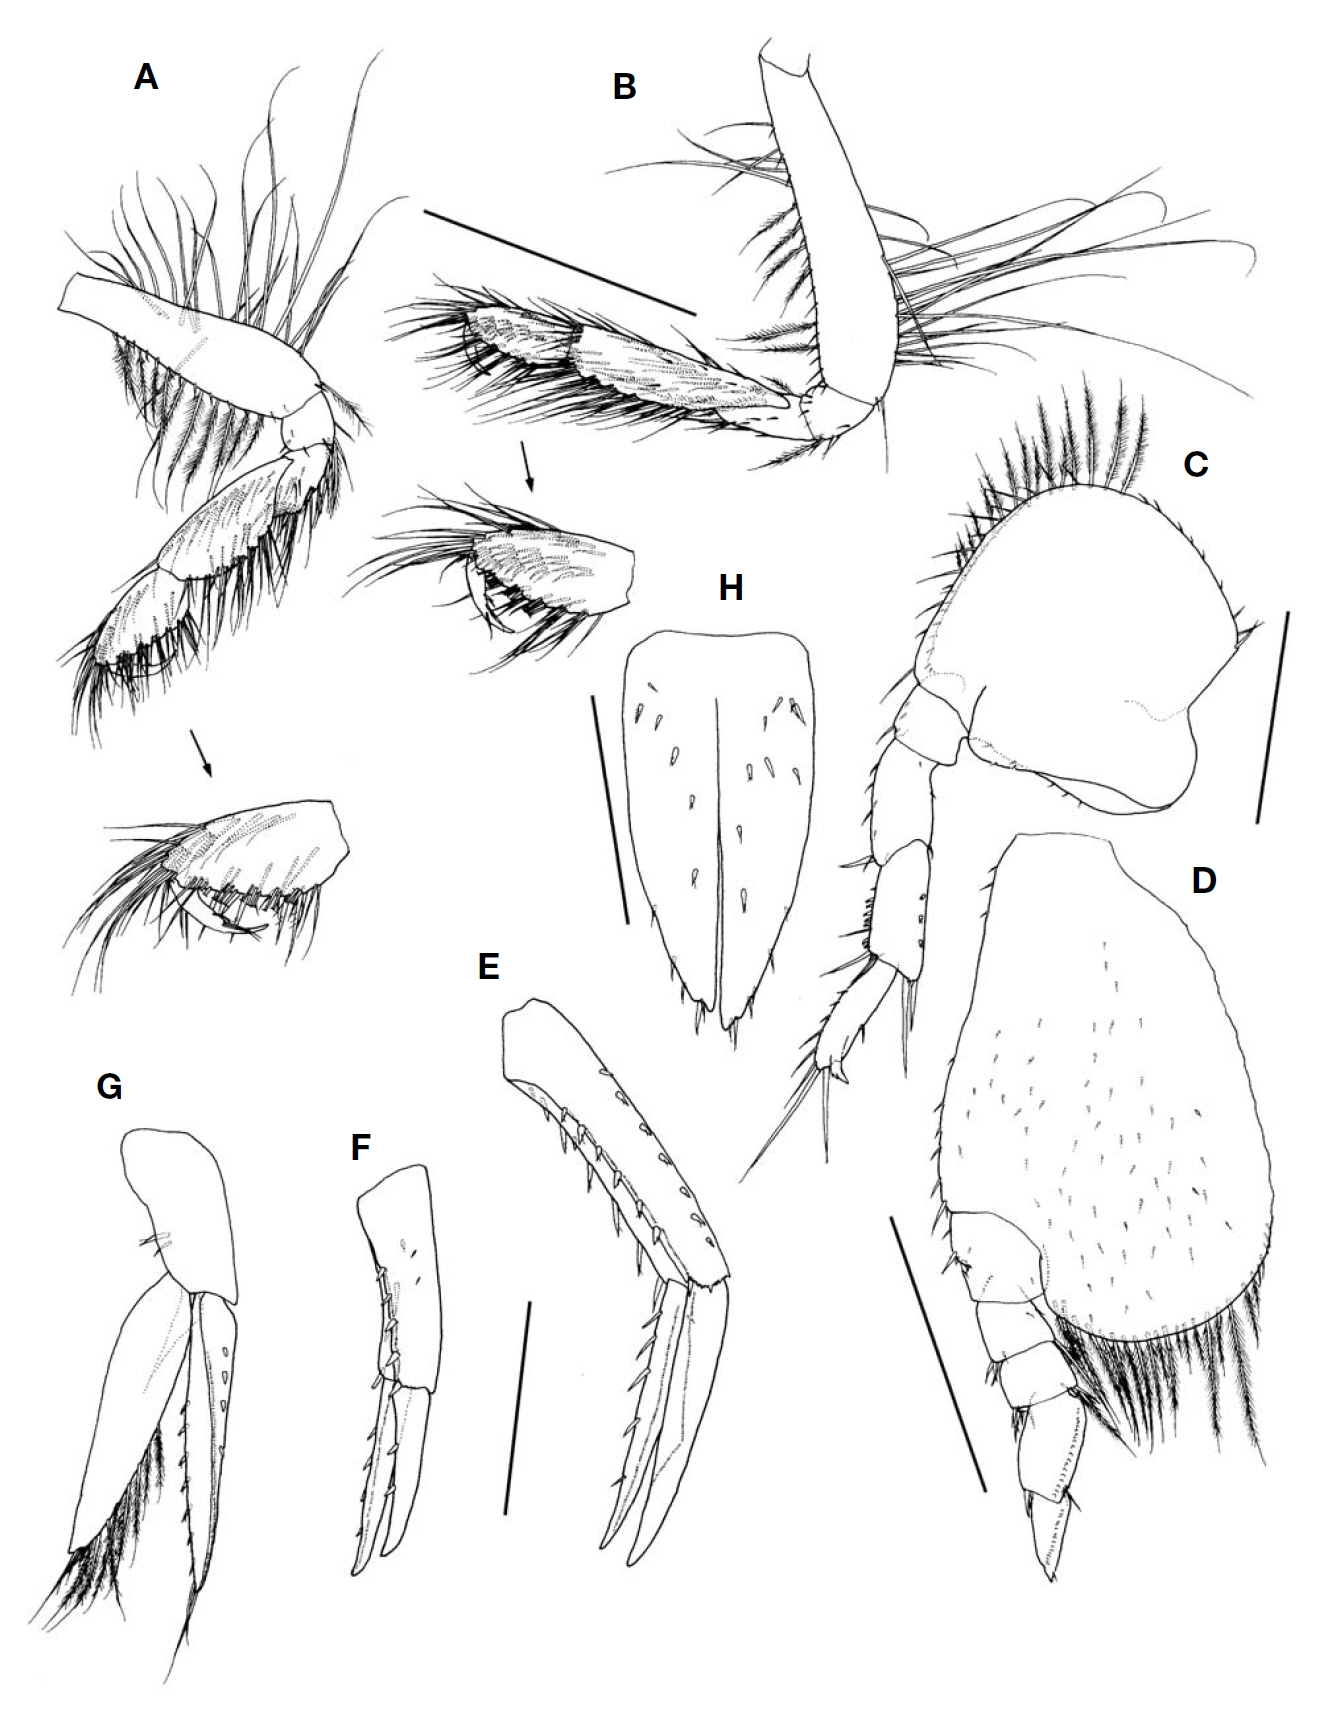 Ampelisca miharaensis Nagata female 5.1 mm. A Gnathopod 1; B Gnathopod 2; C Pereopod 6; D Pereopod 7; E Uropod 1; F Uropod 2; G Uropod 3; H Telson. Scale bars: A-D=0.5 mm E-G=0.3 mm H=0.2 mm.